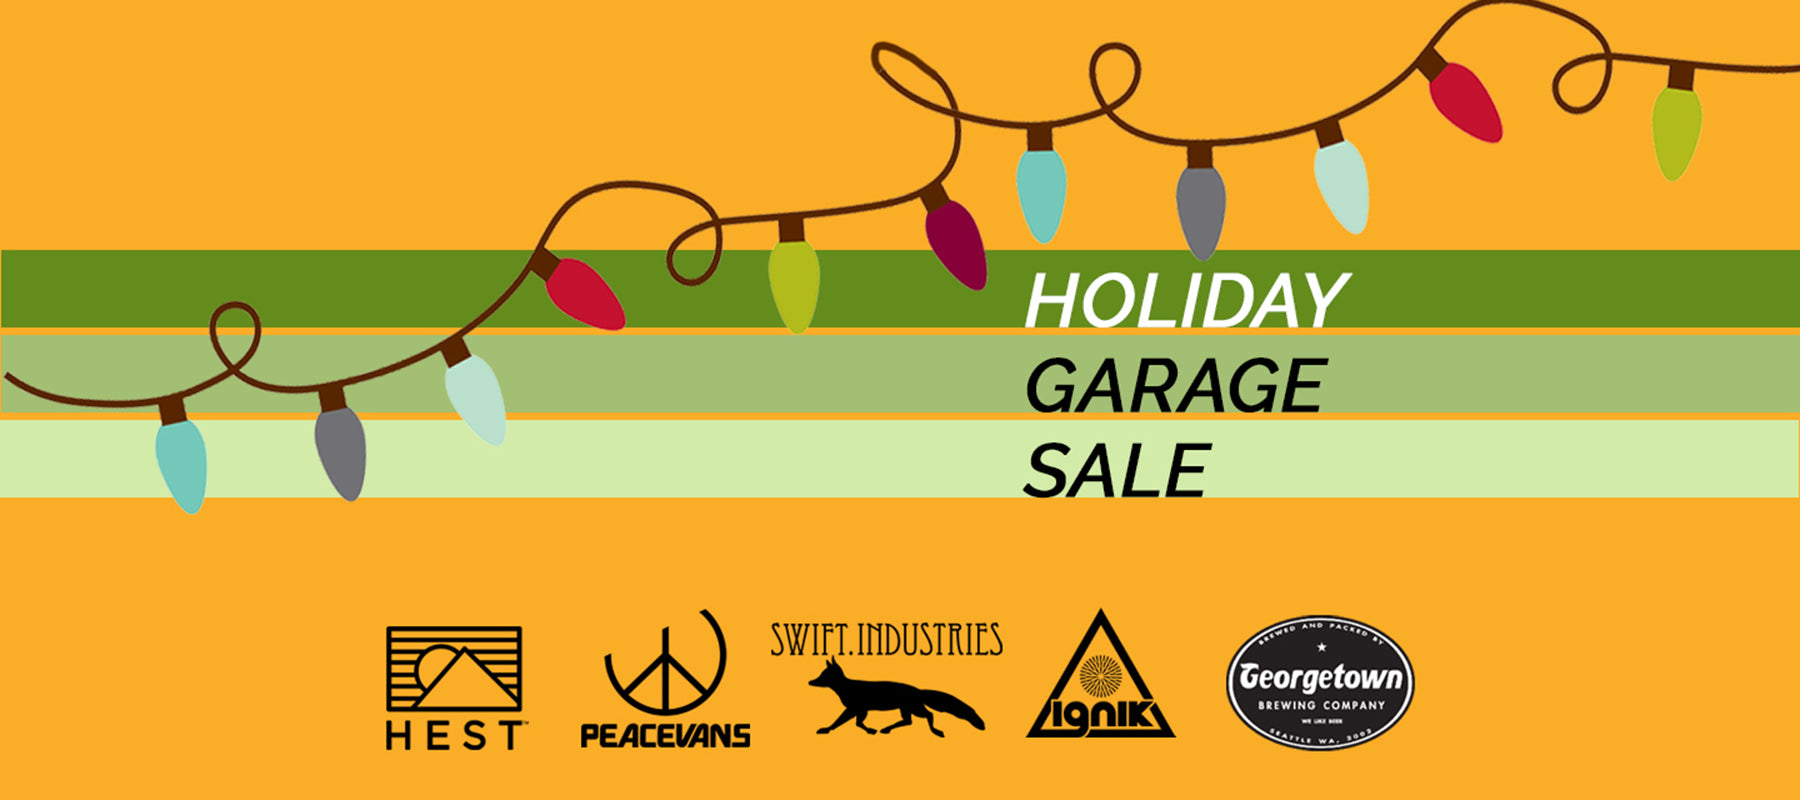 Holiday Garage Sale